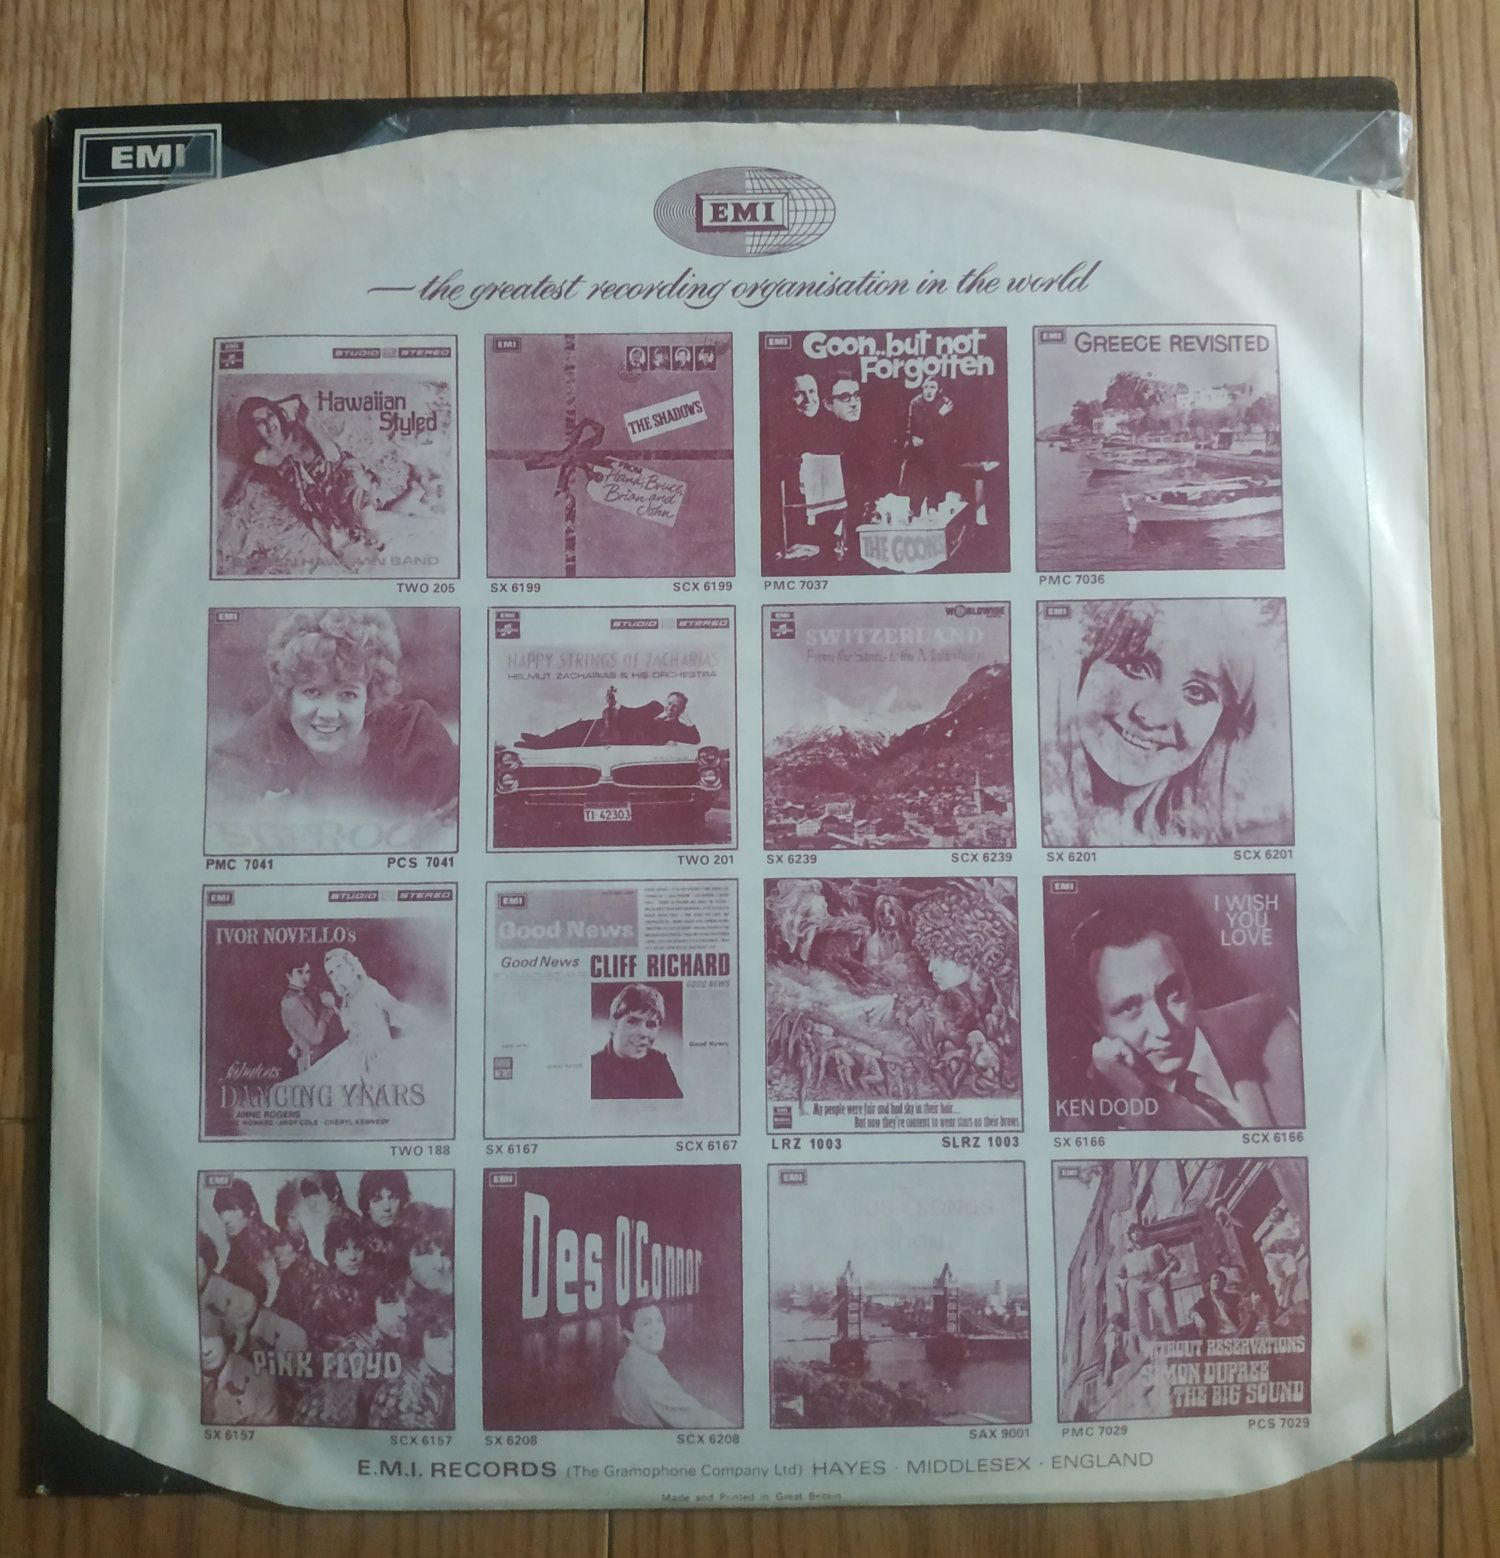 Hollies Greatest UK first press lp vinyl вініл платівка mono beatles